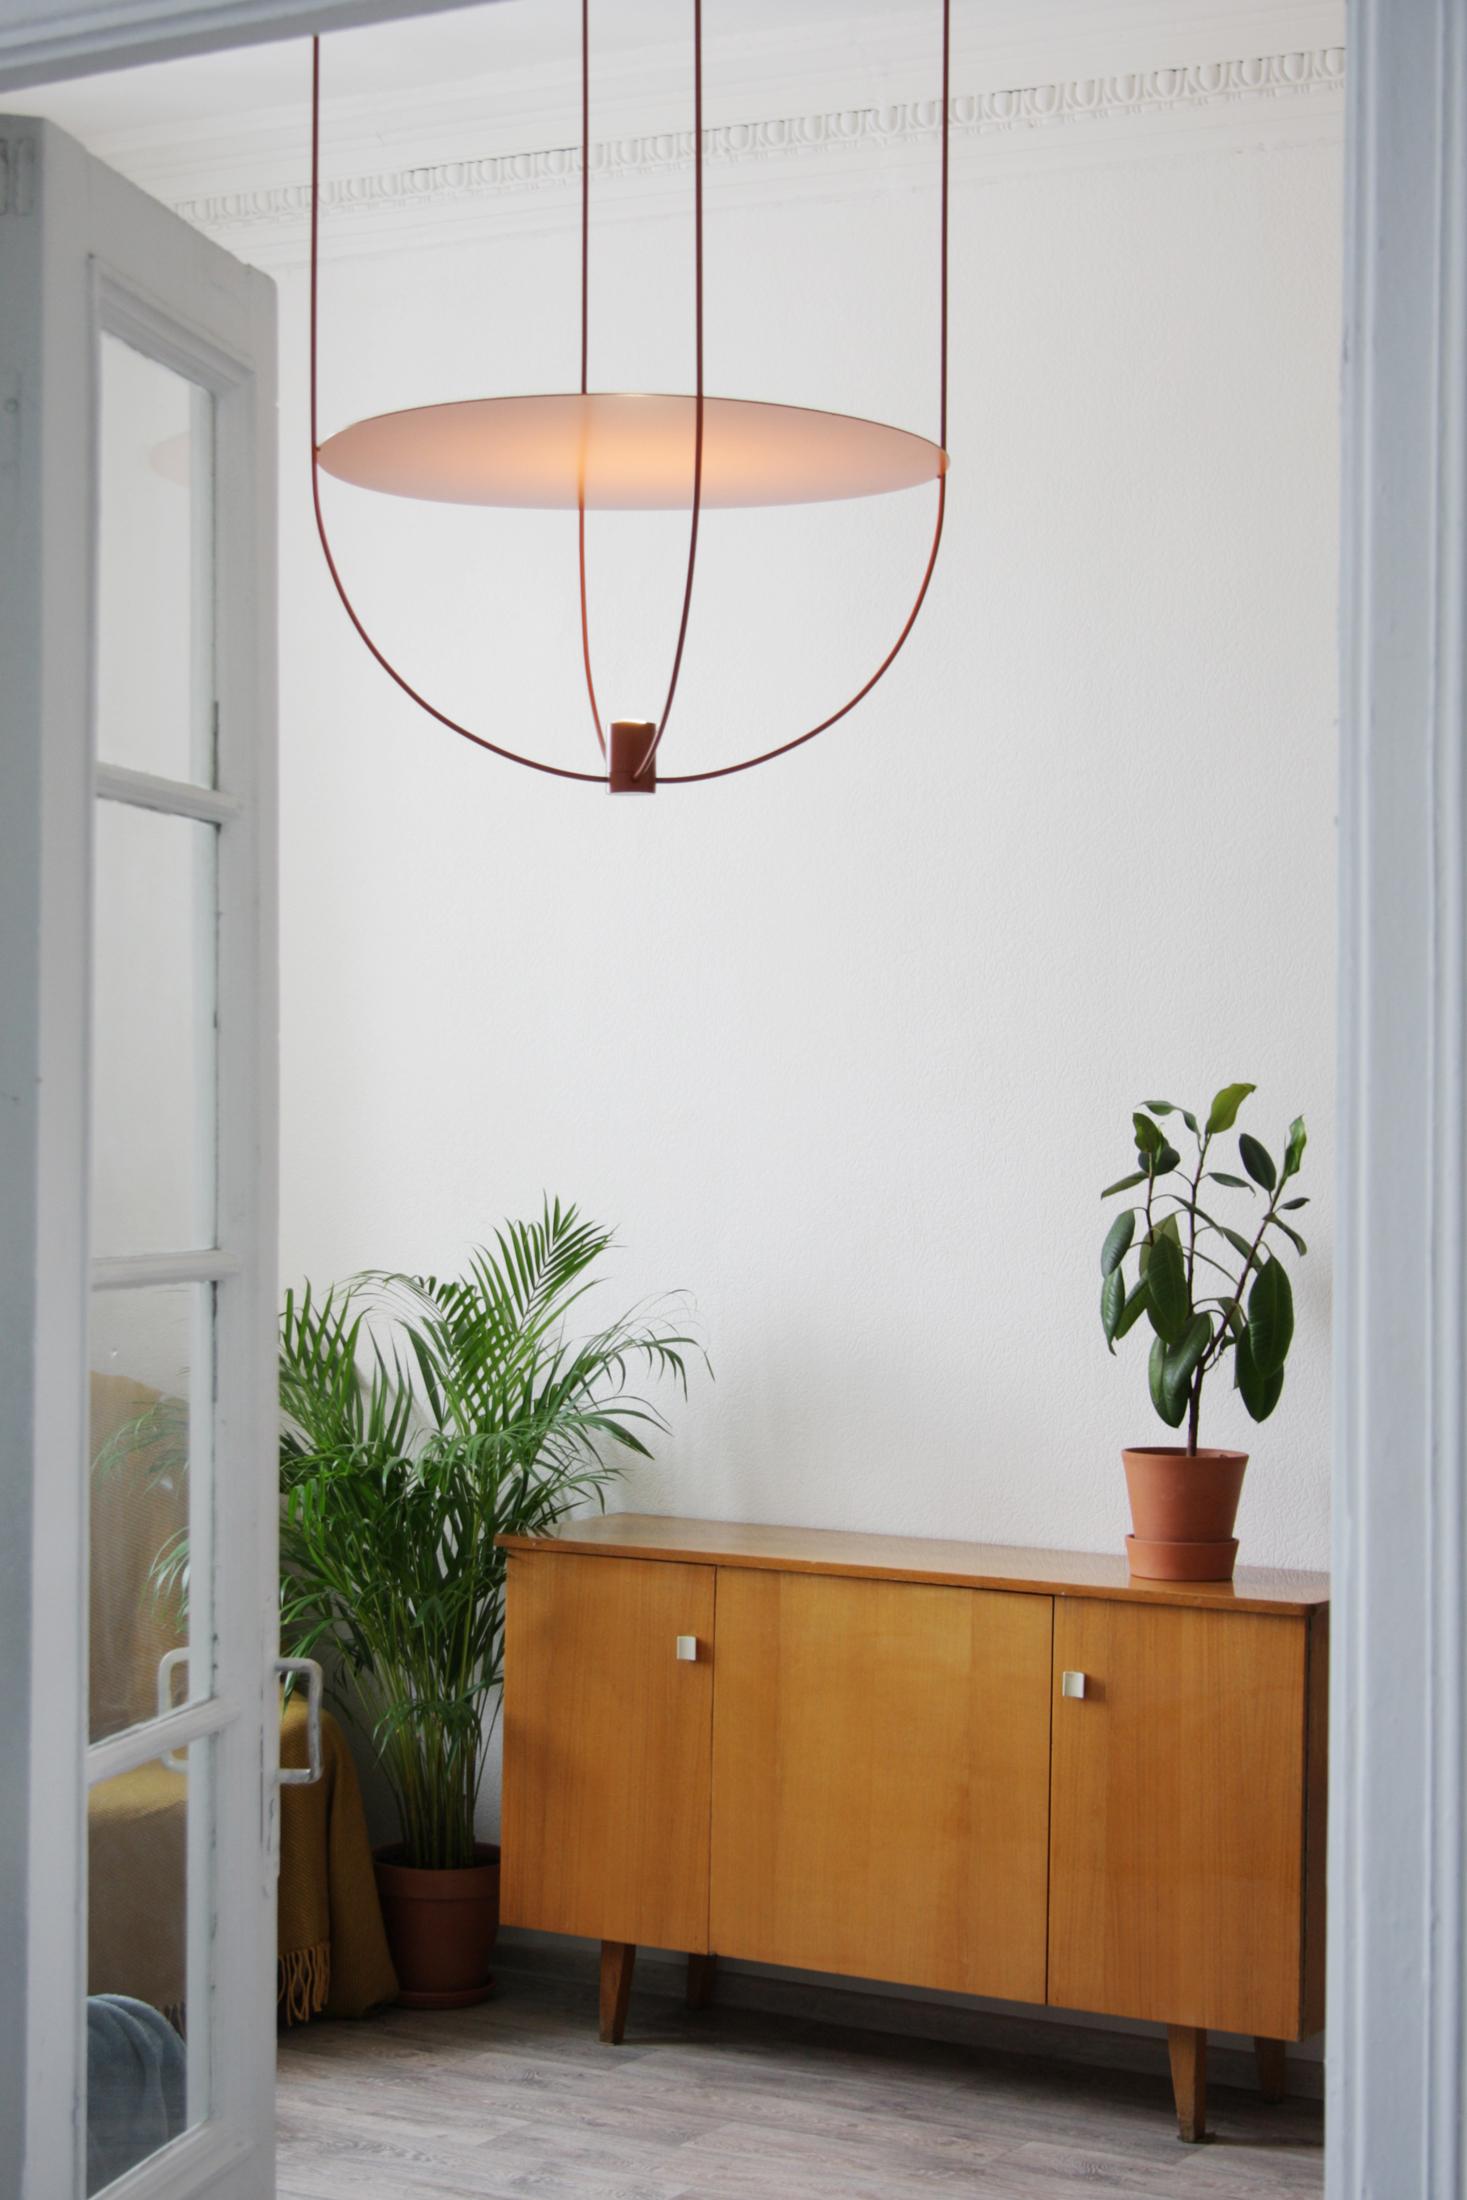 European Thin, Metal-Framed Pendant Lamp from 